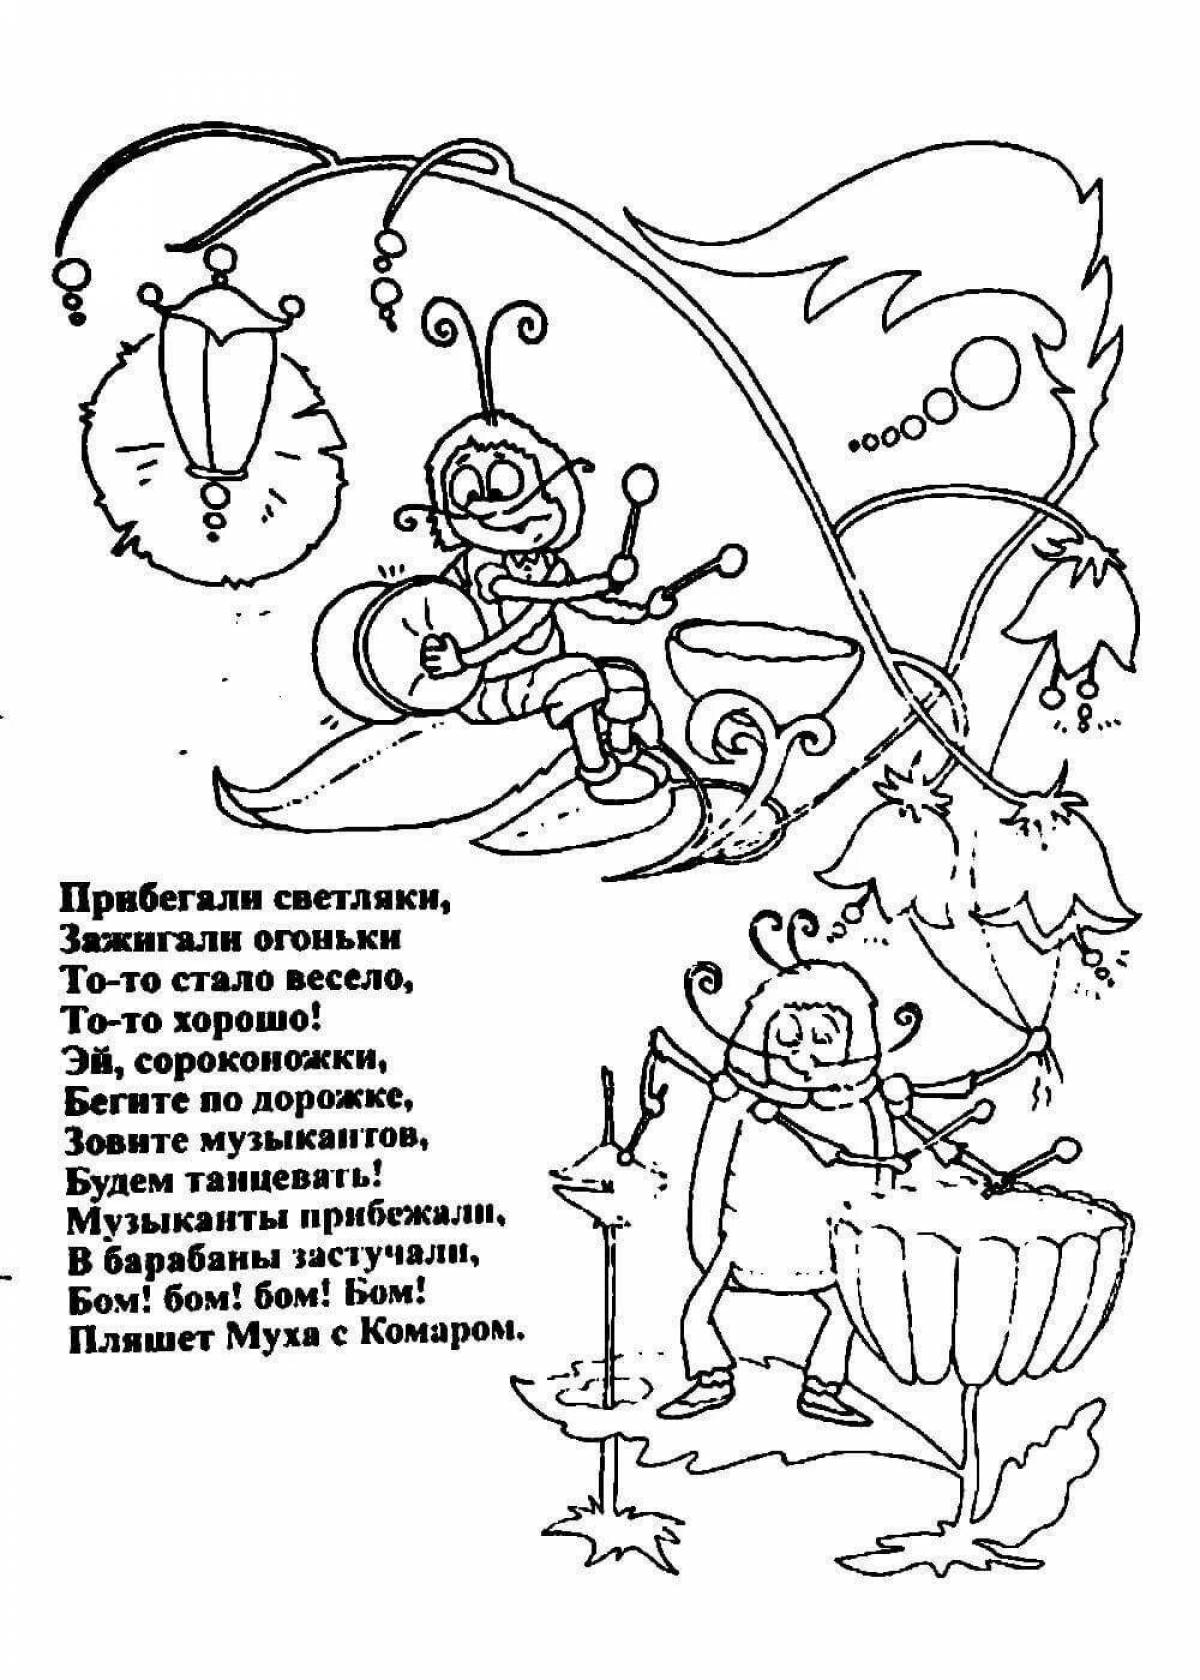 Chukovsky coloring book